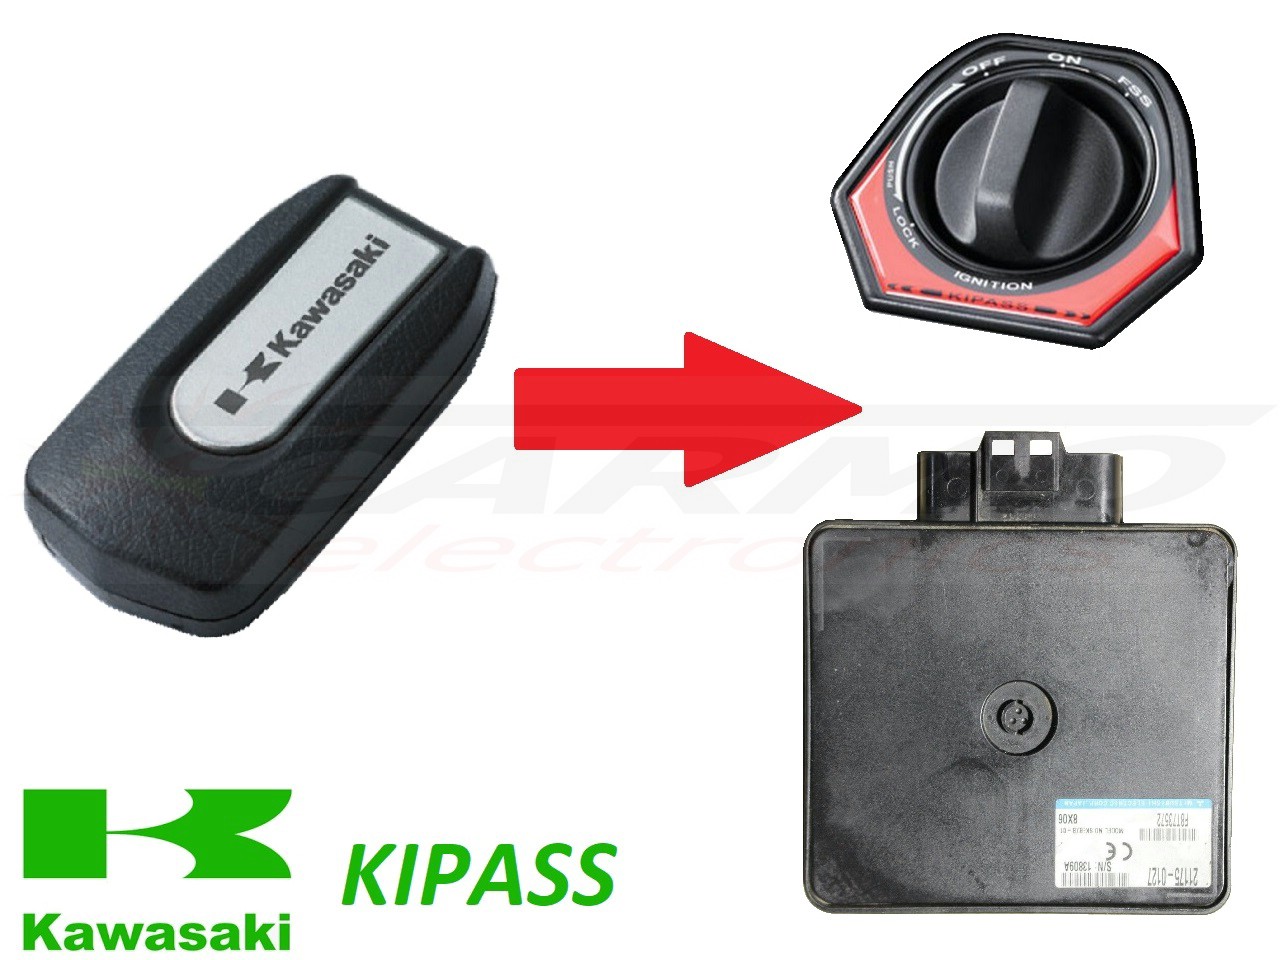 Kawasaki GTR1400 Concours KIPASS FOB inleren als u alle sleutels kwijt bent - Clique na Imagem para Fechar